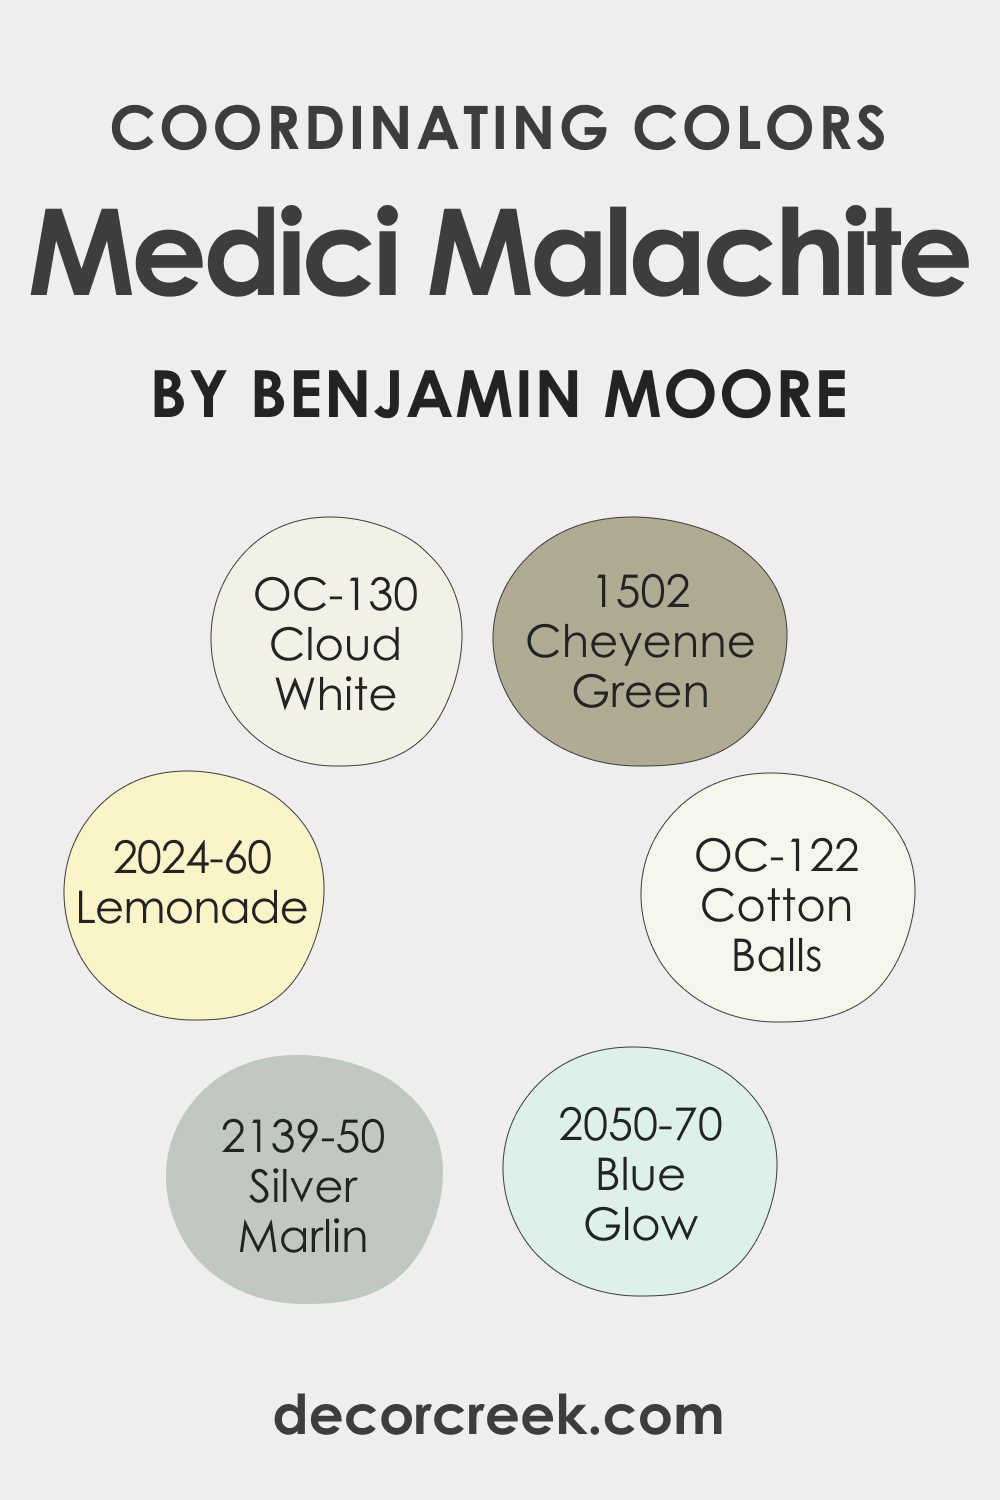 Coordinating Colors of Medici Malachite 600